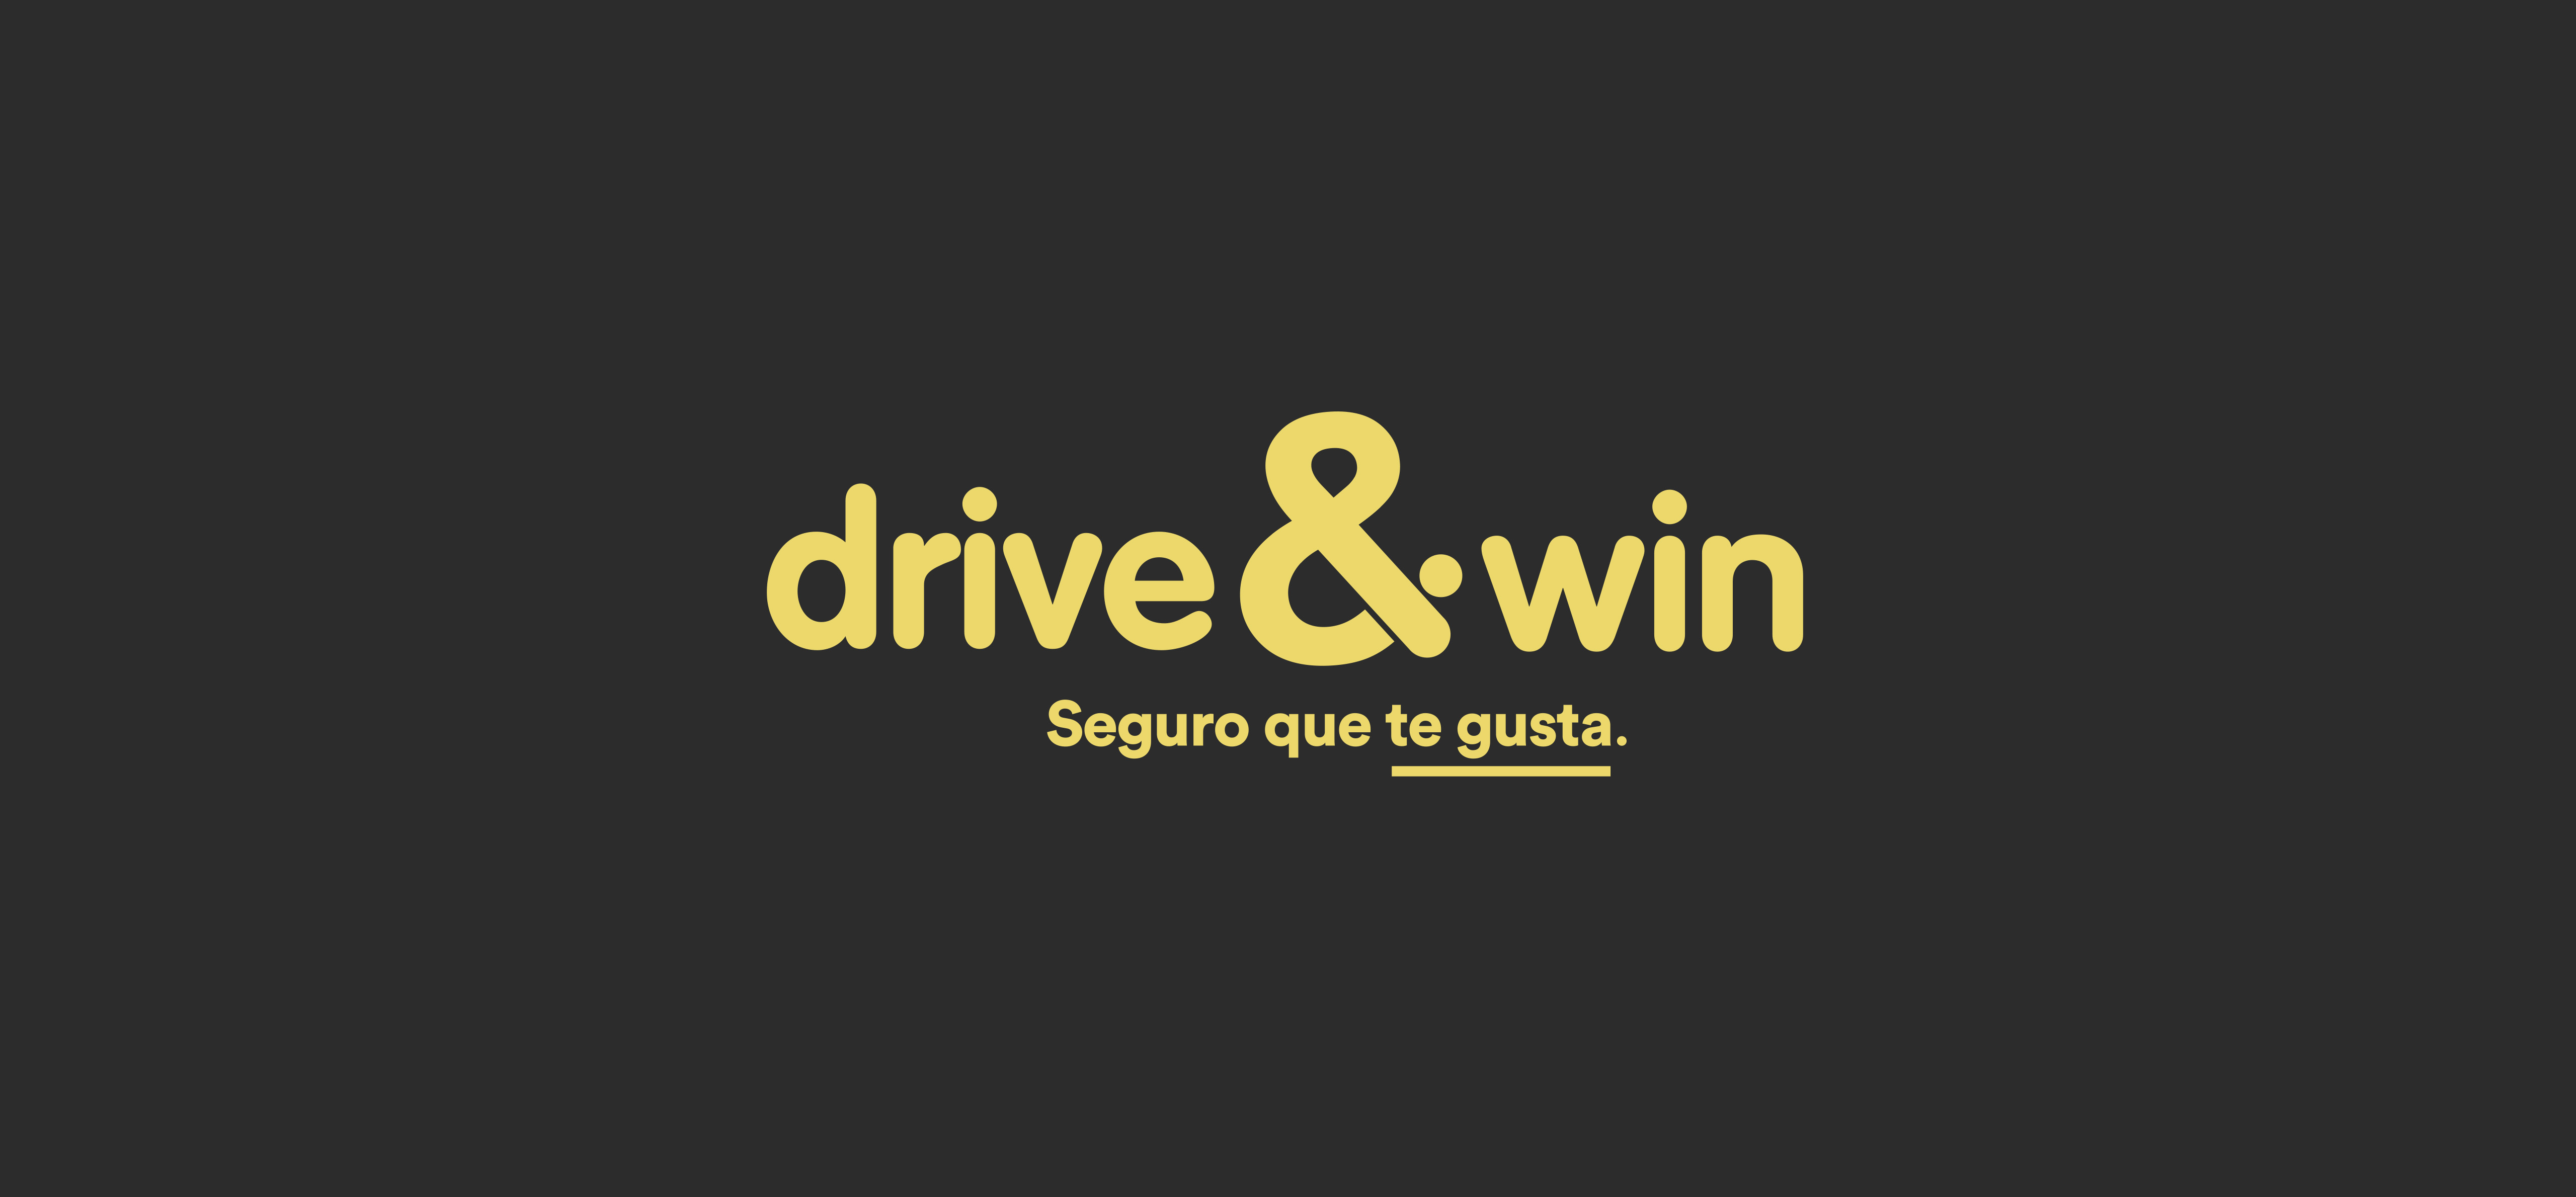 Drive & Win